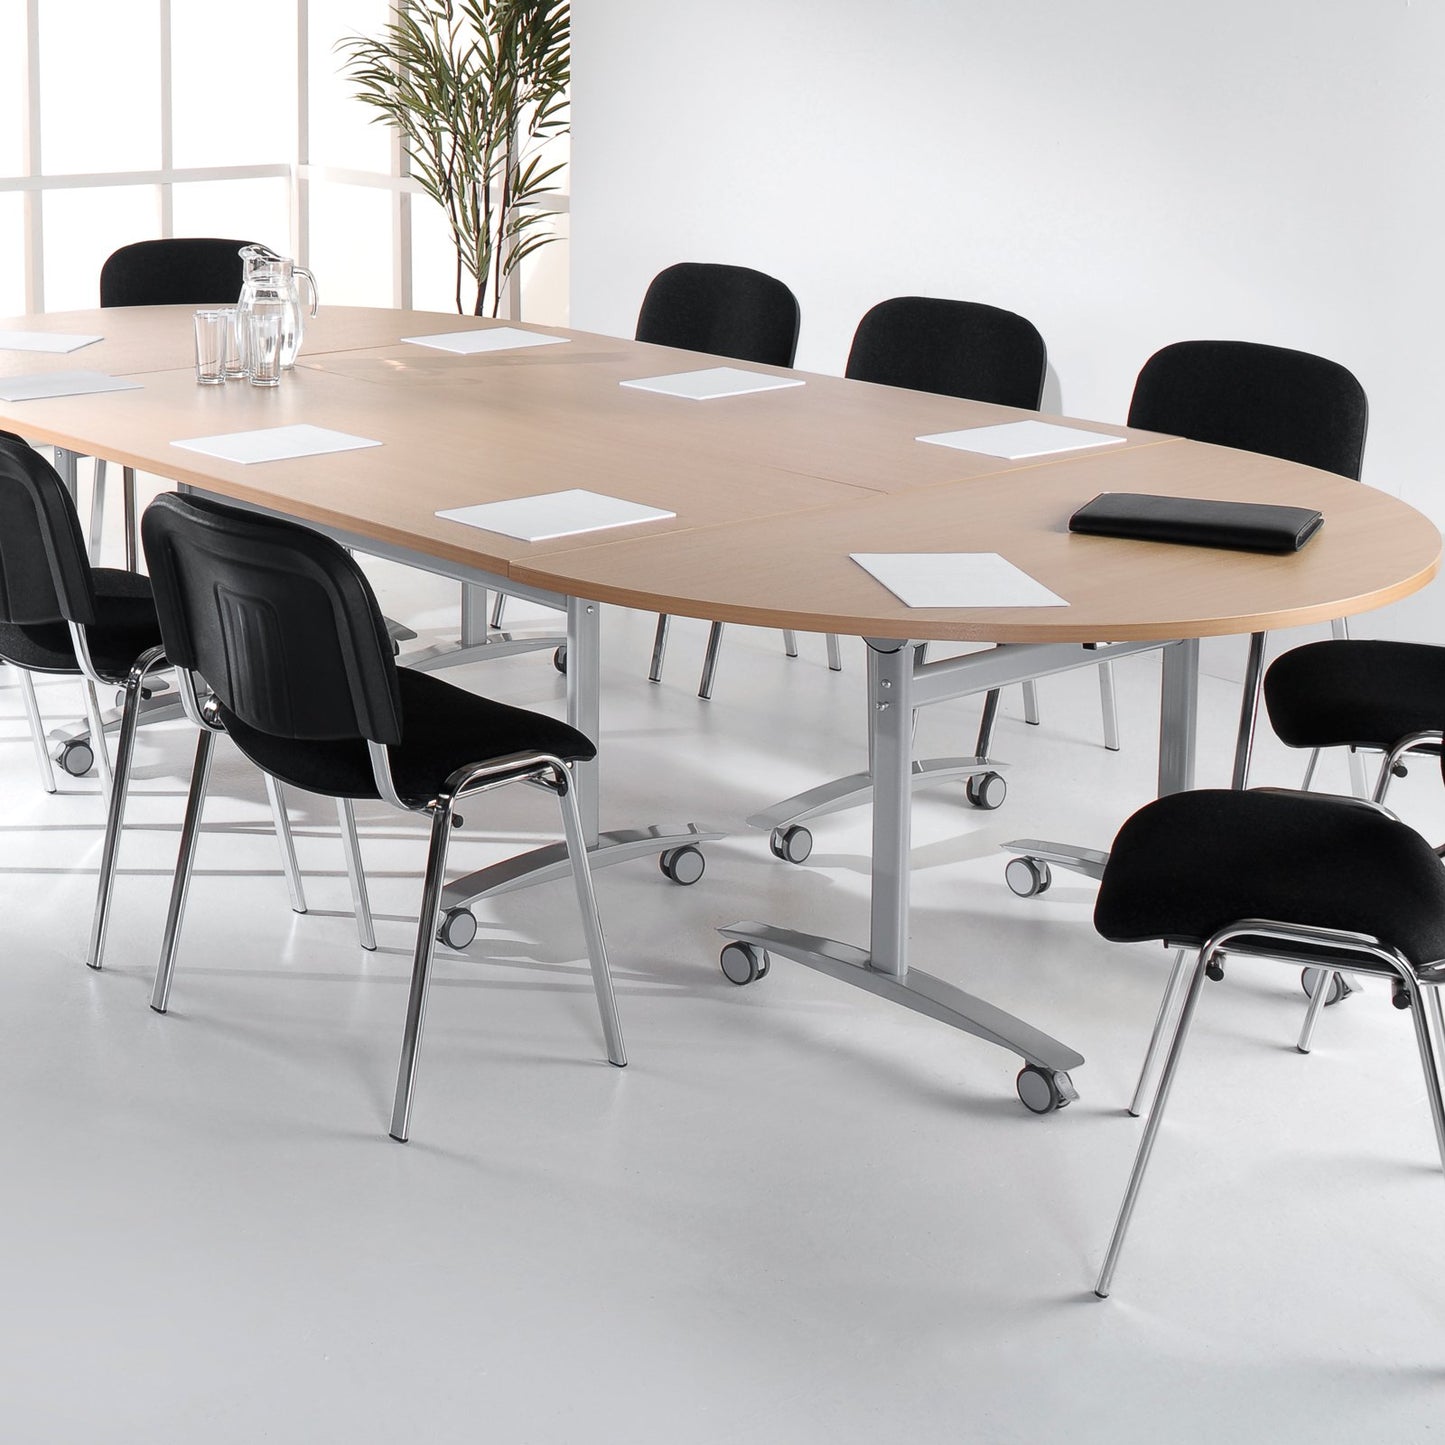 Semi circular deluxe fliptop meeting table